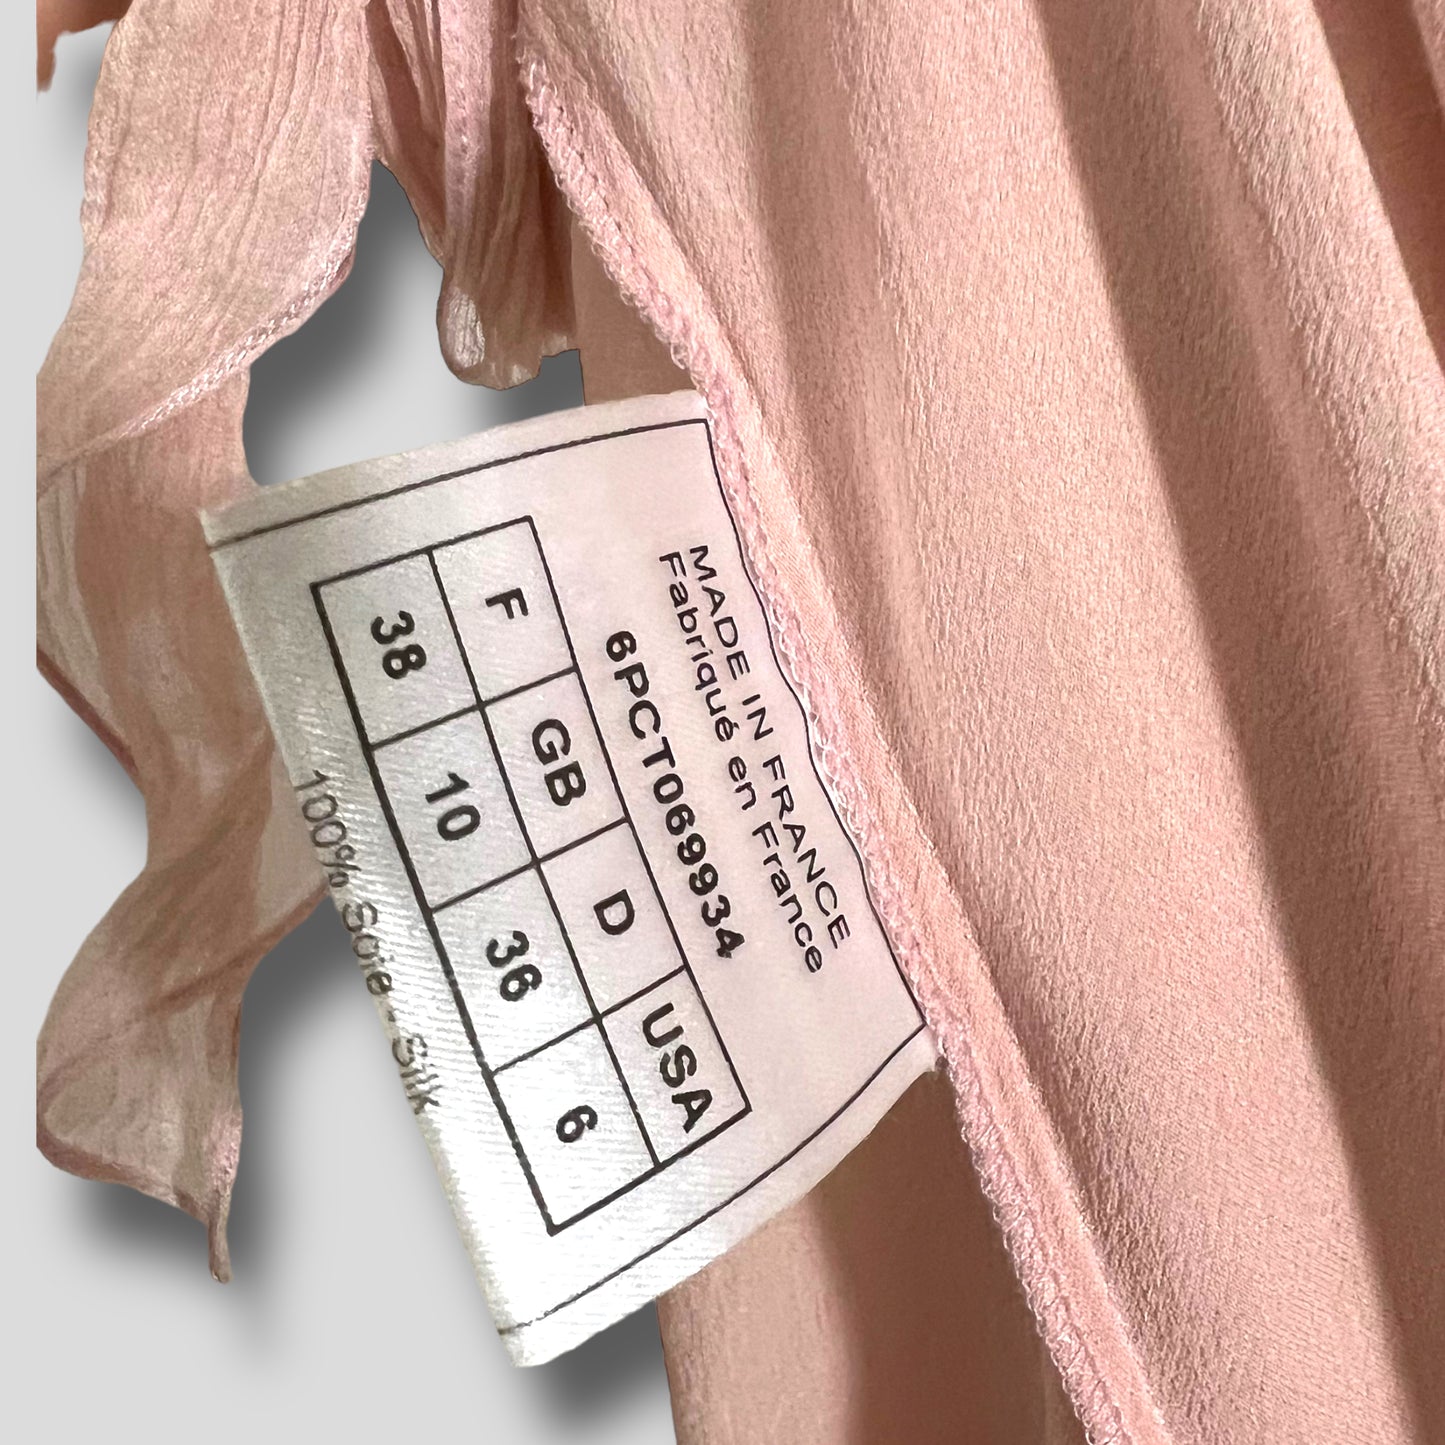 John Galliano silk pink 2006 dress